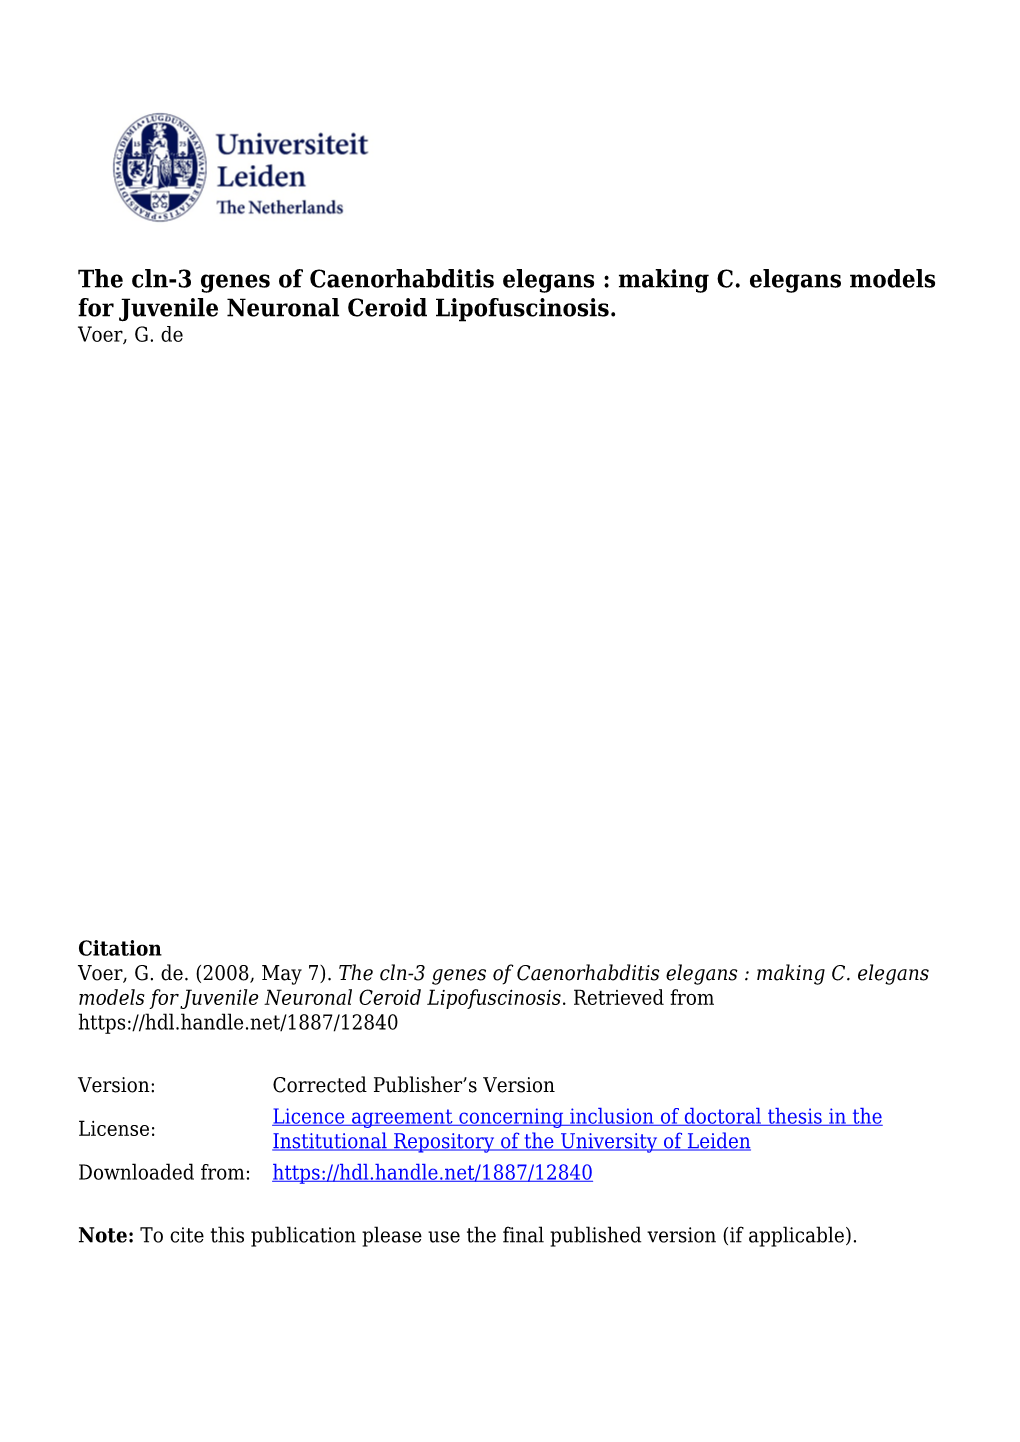 Caenorhabditis Elegans As a Model for Lysosomal Storage Disorders